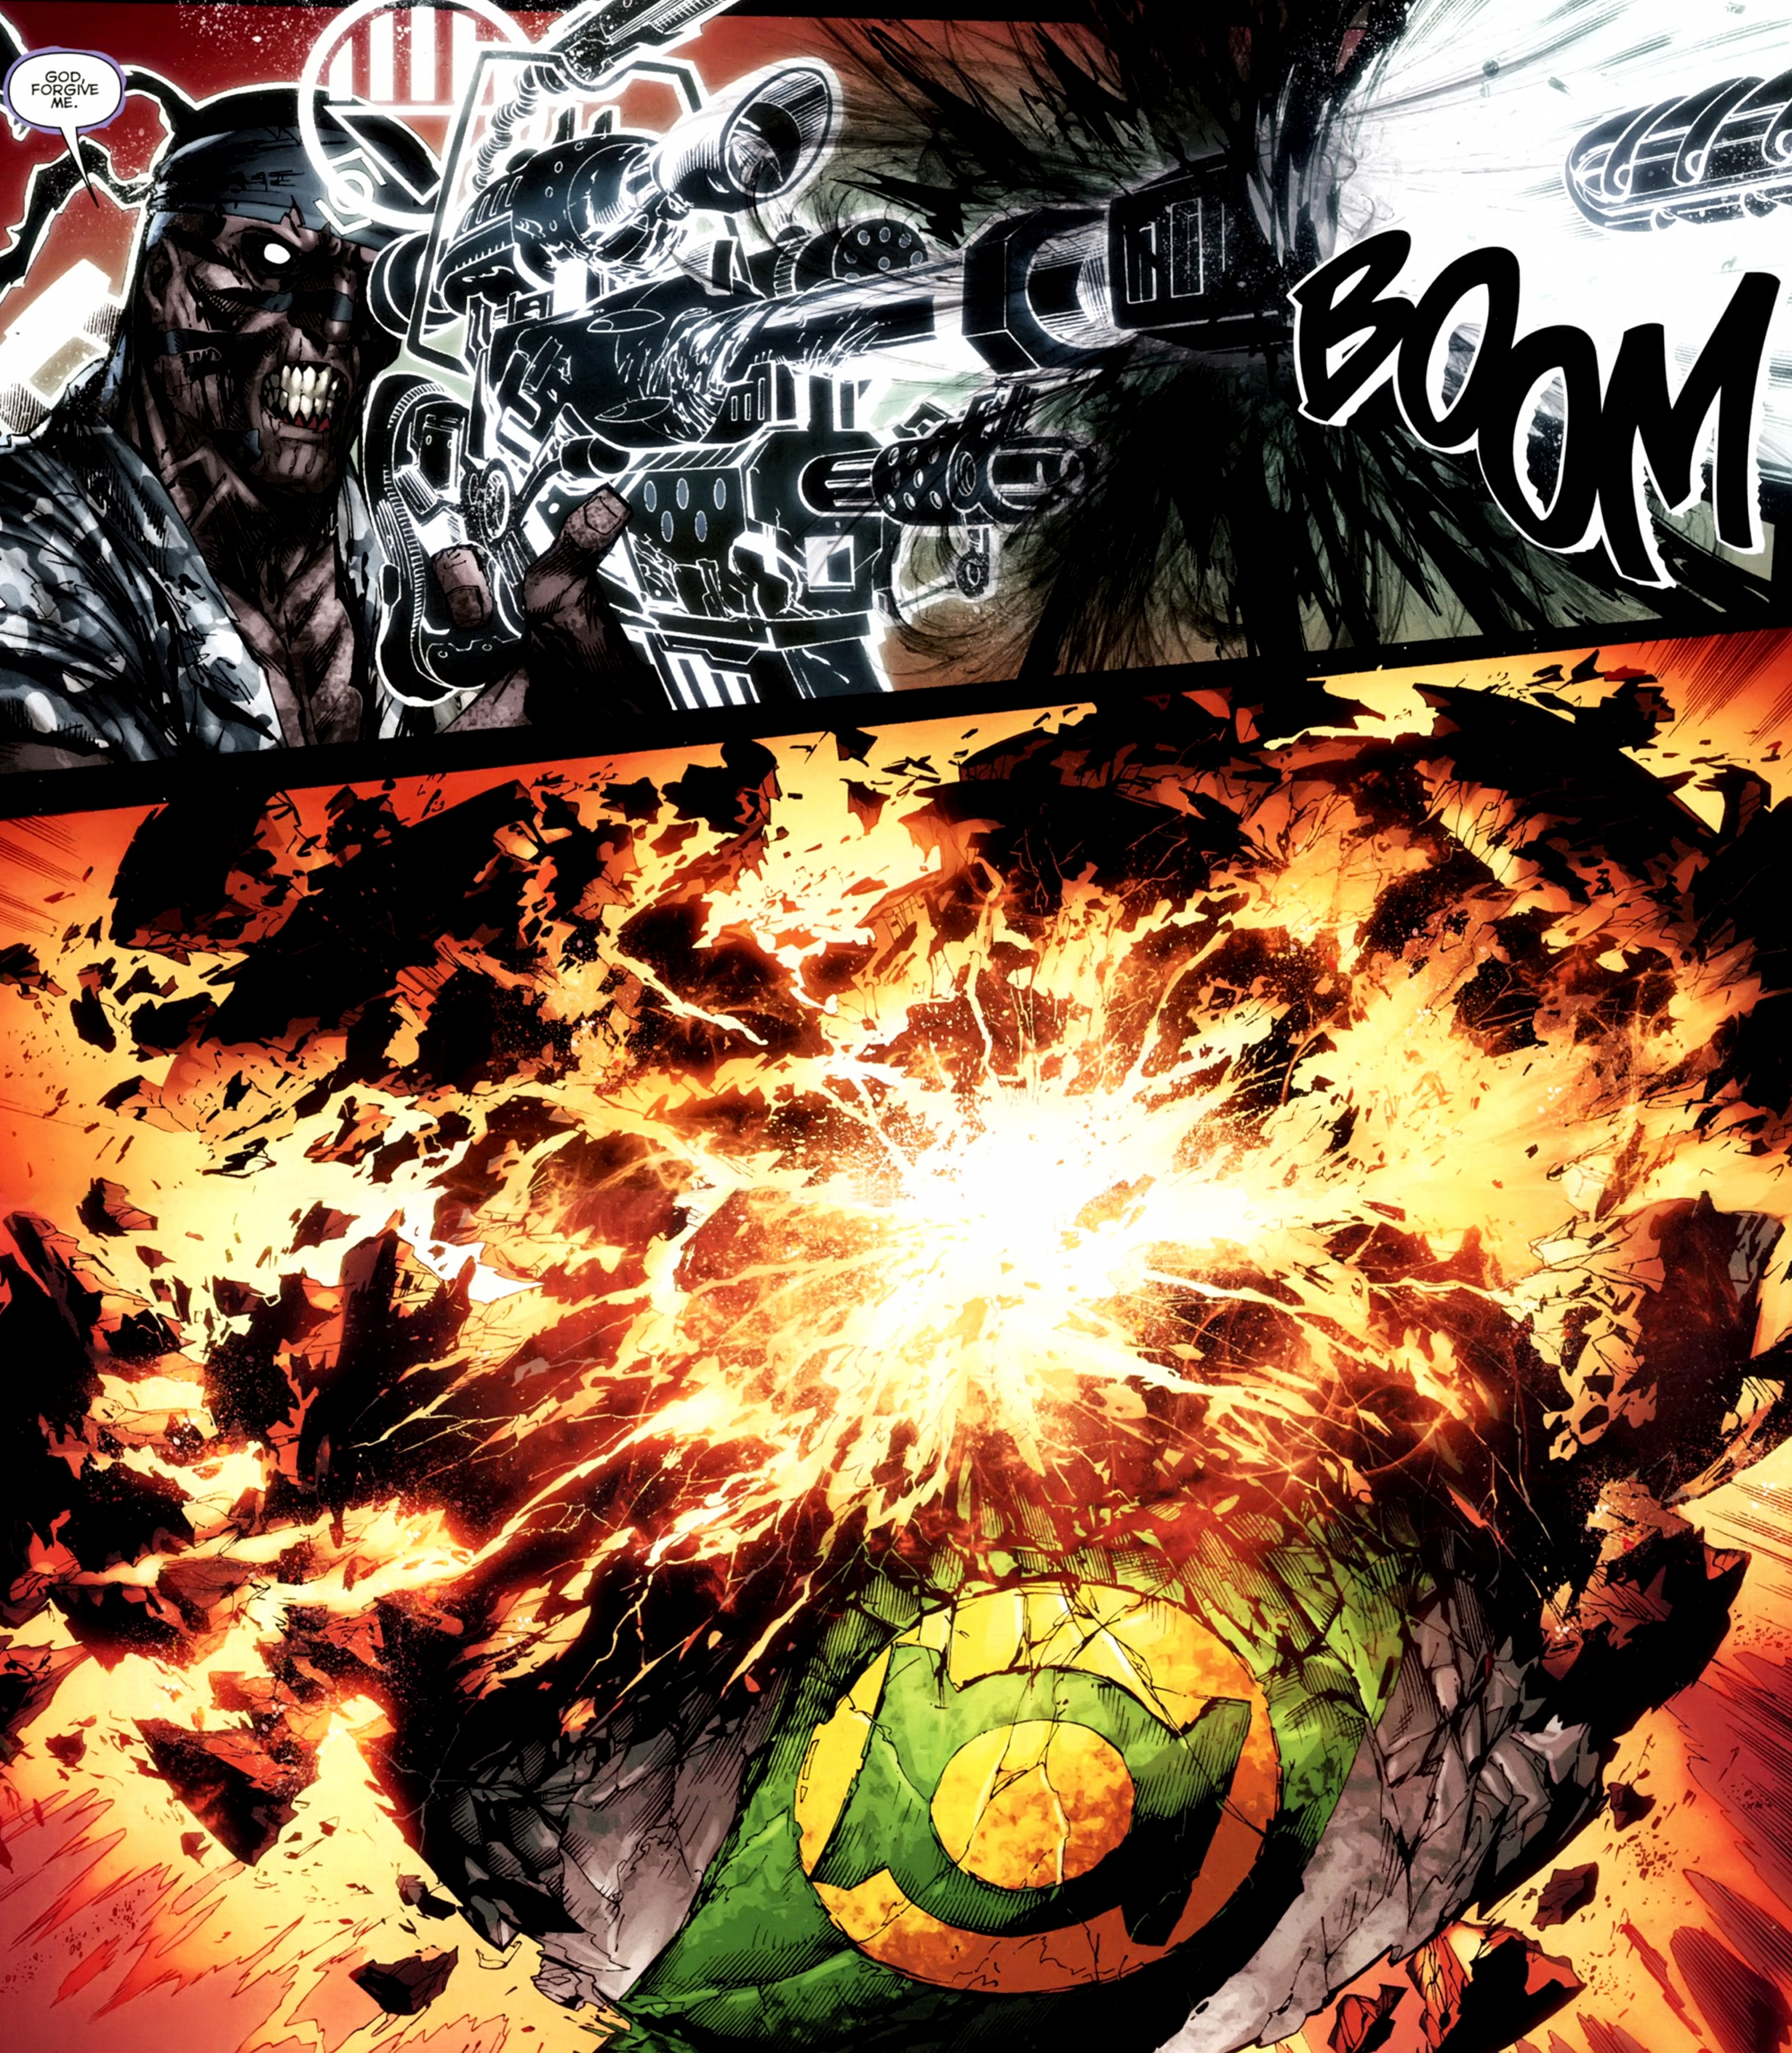 Amazoncom: Green Lantern: War of the Green Lanterns